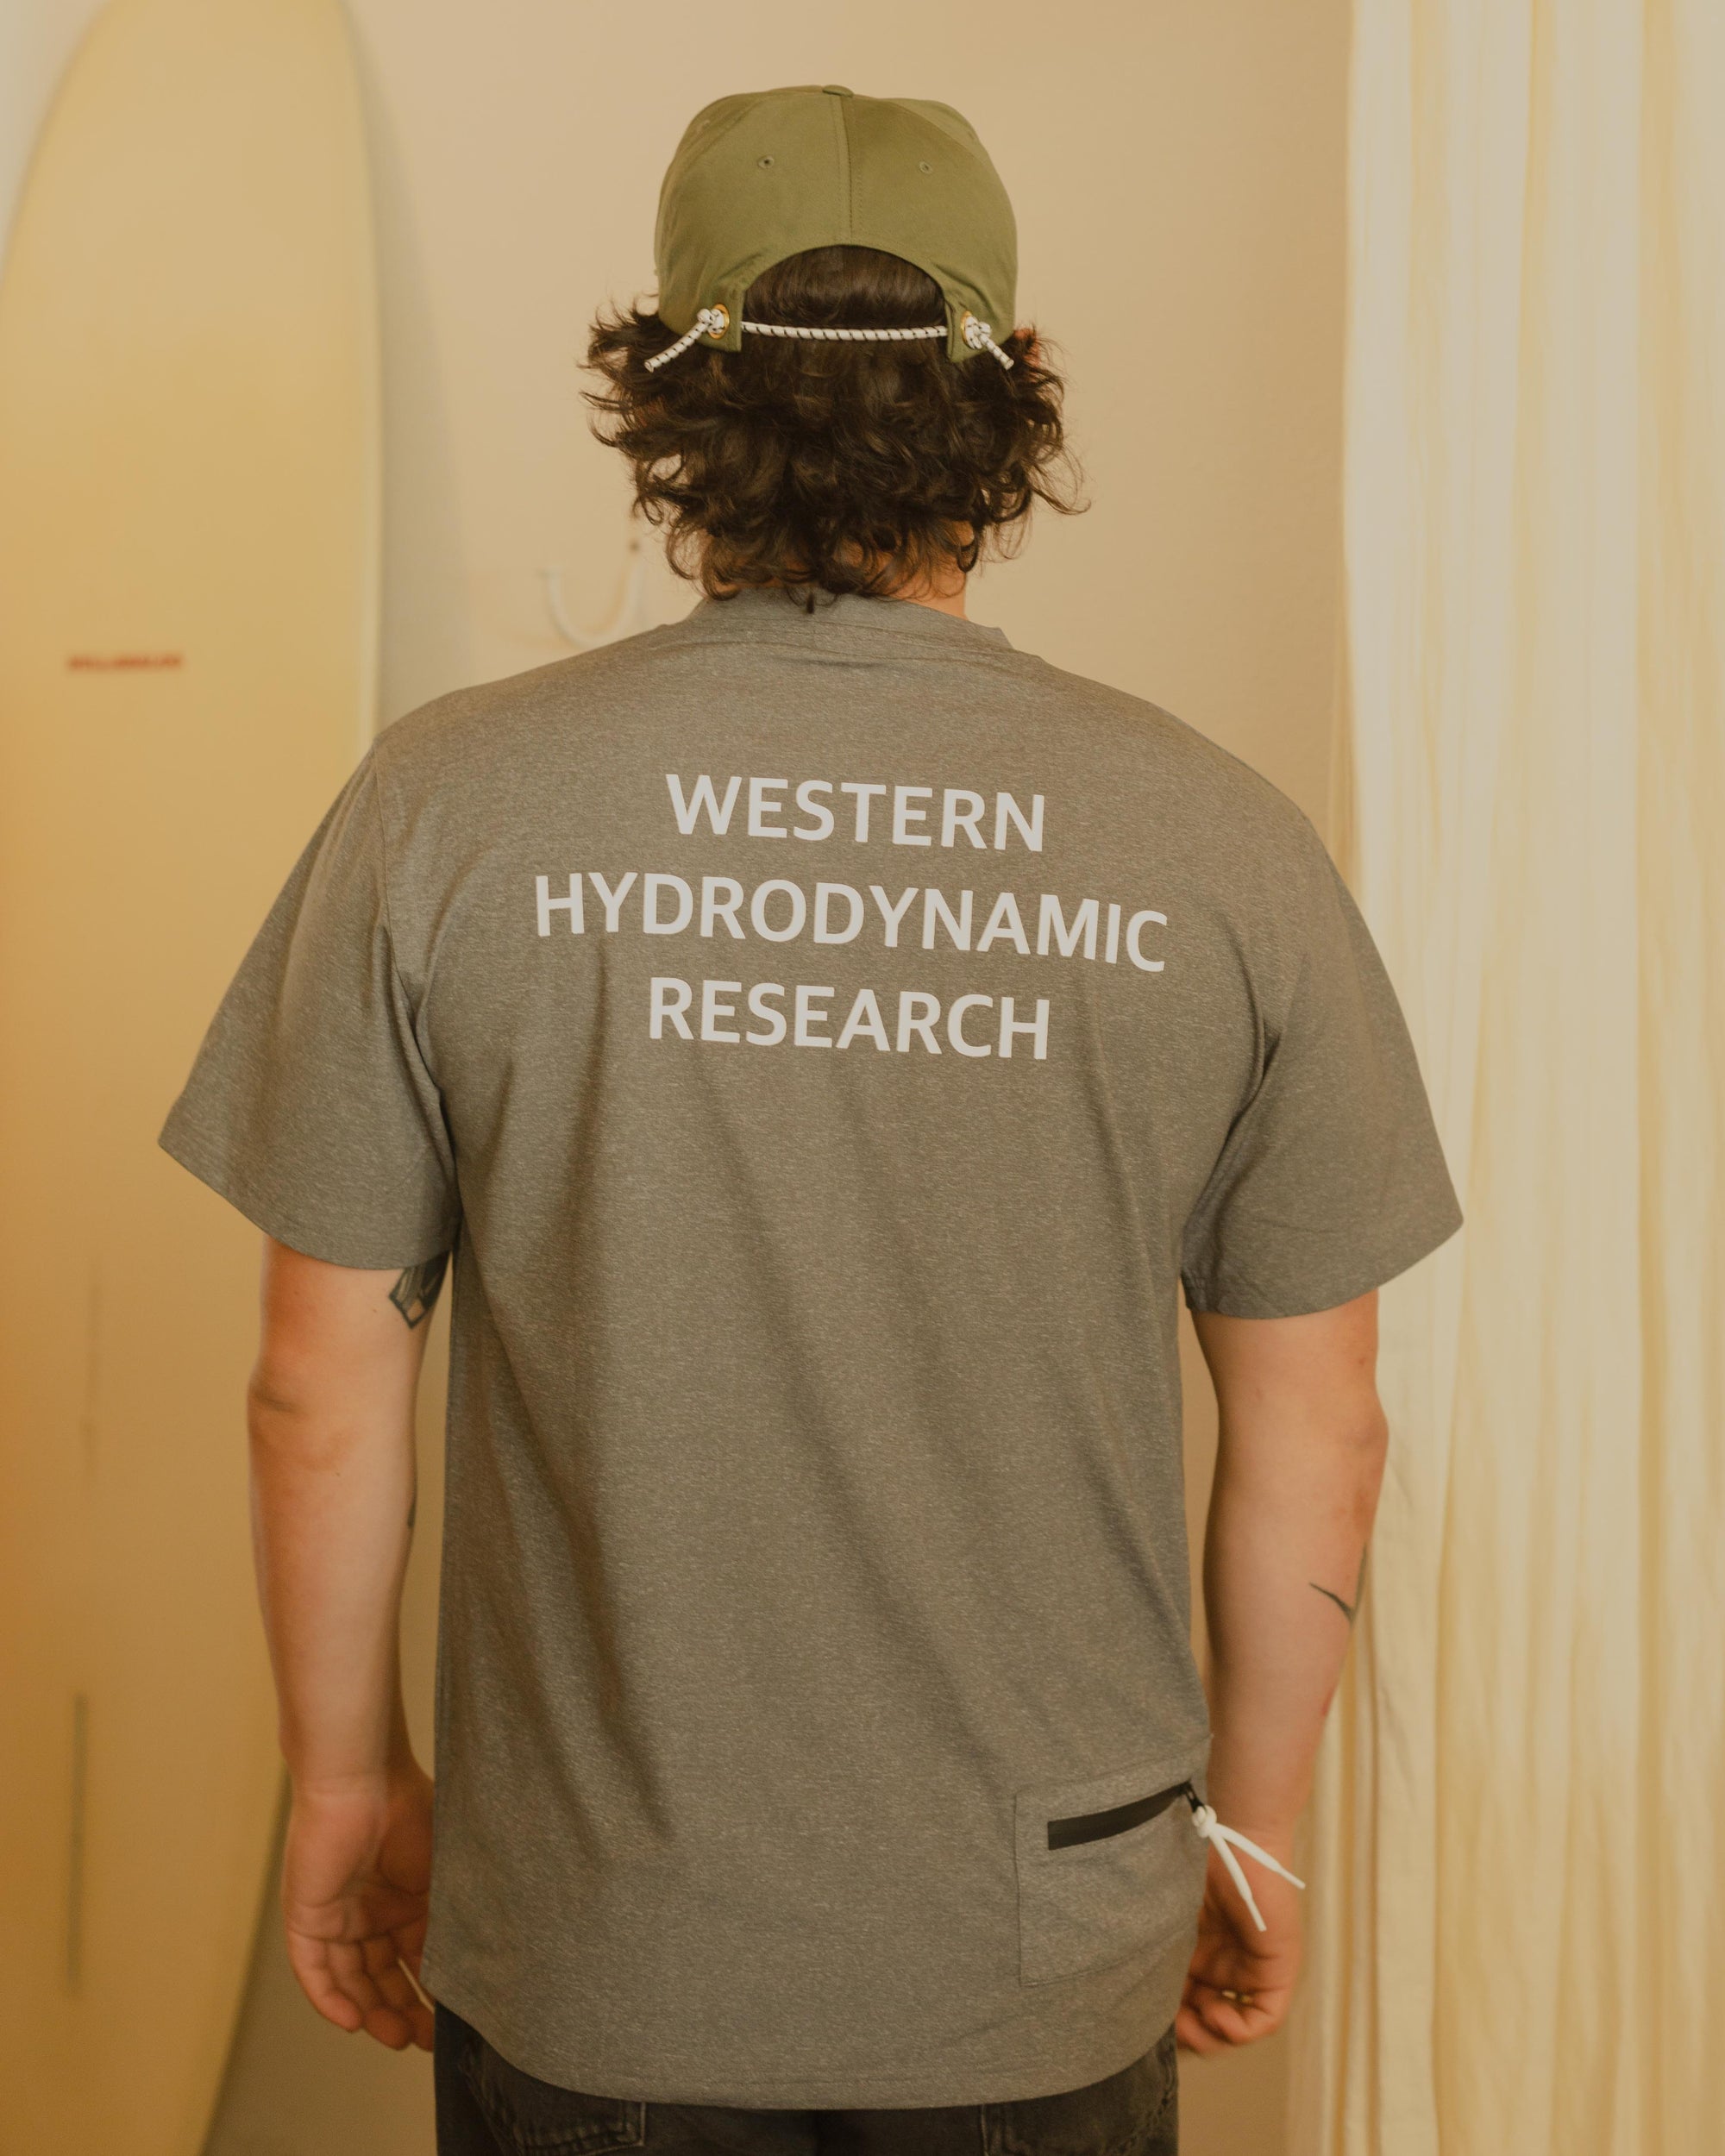 Western Hydrodynamic Research - Lycra Tee back view